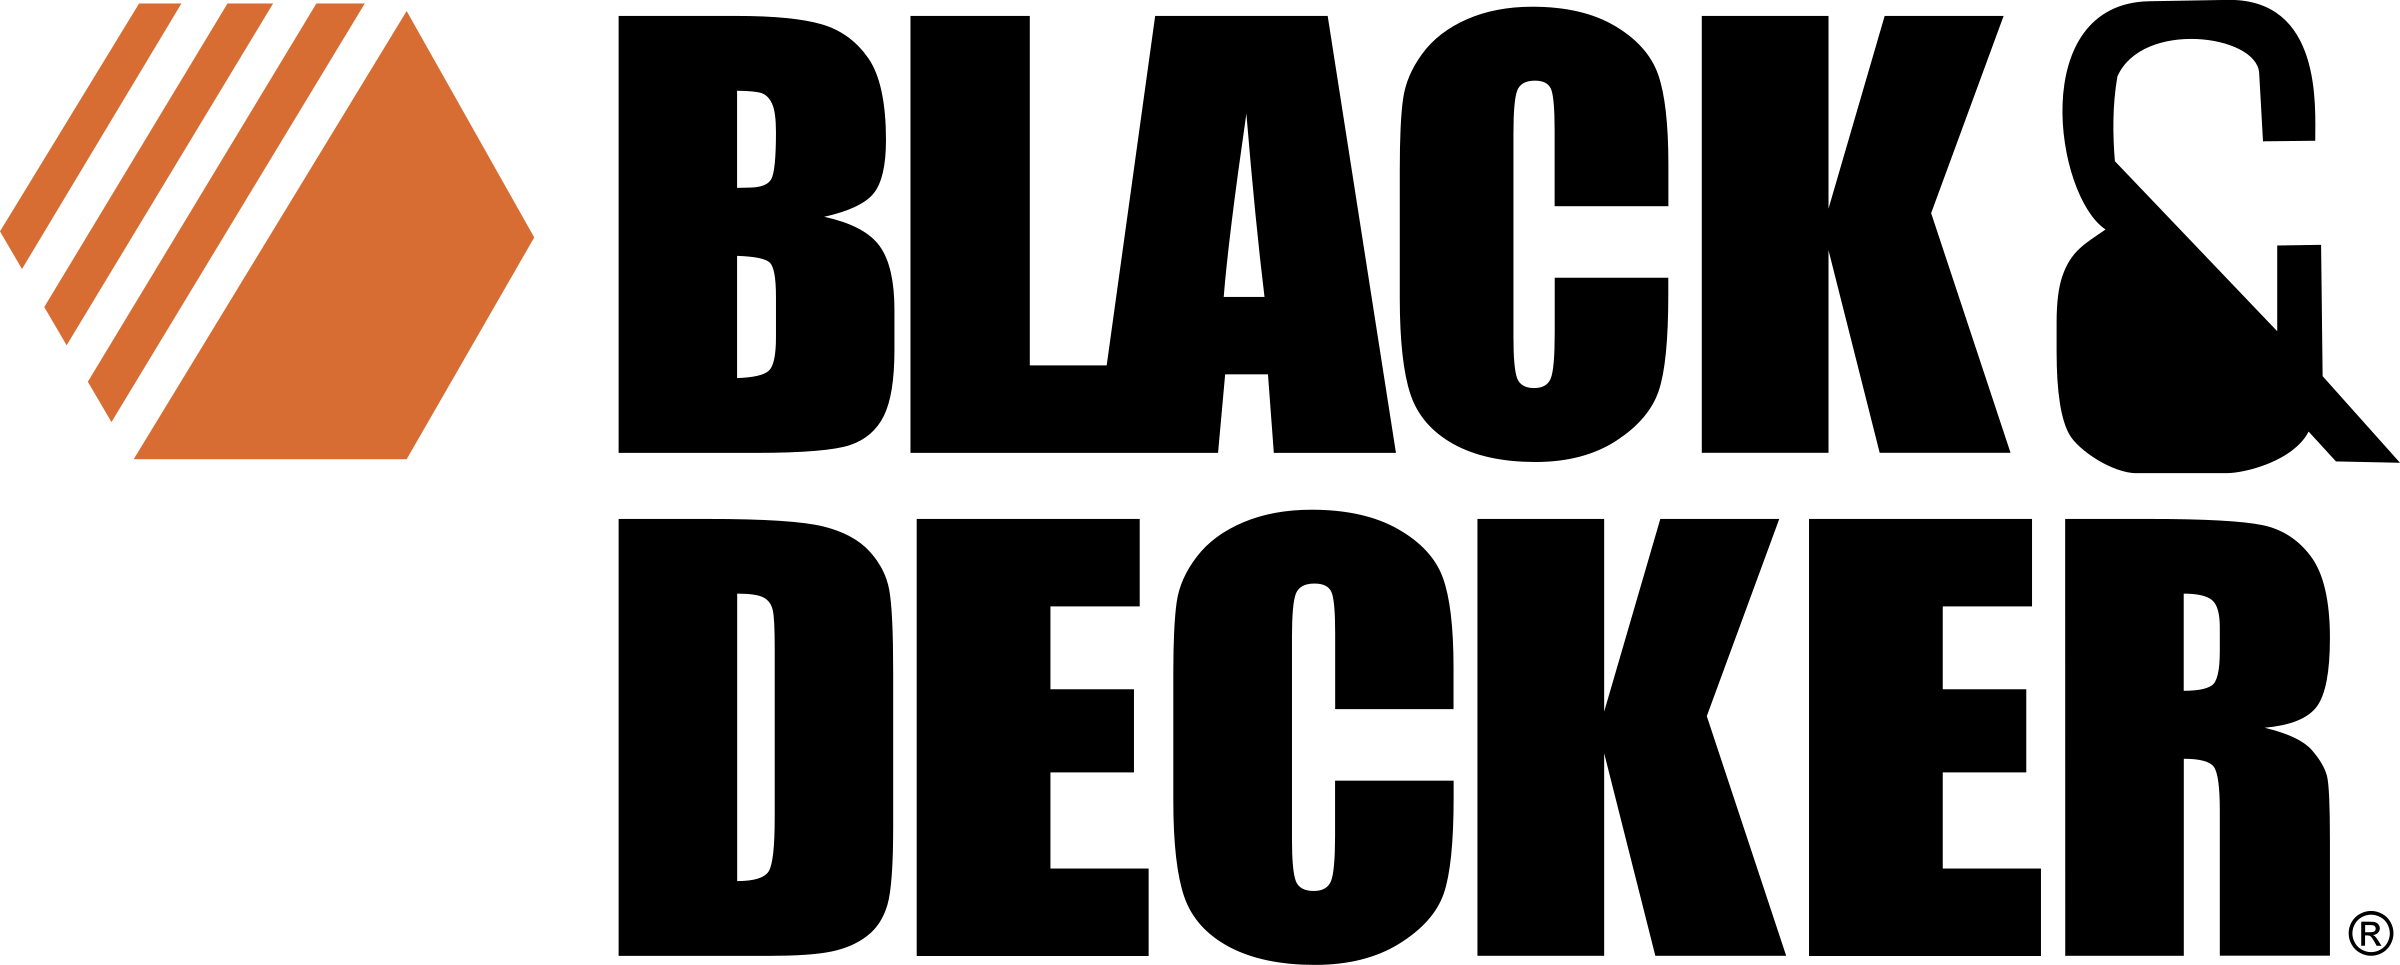 black-decker-3-logo-png-transparent-2001705462